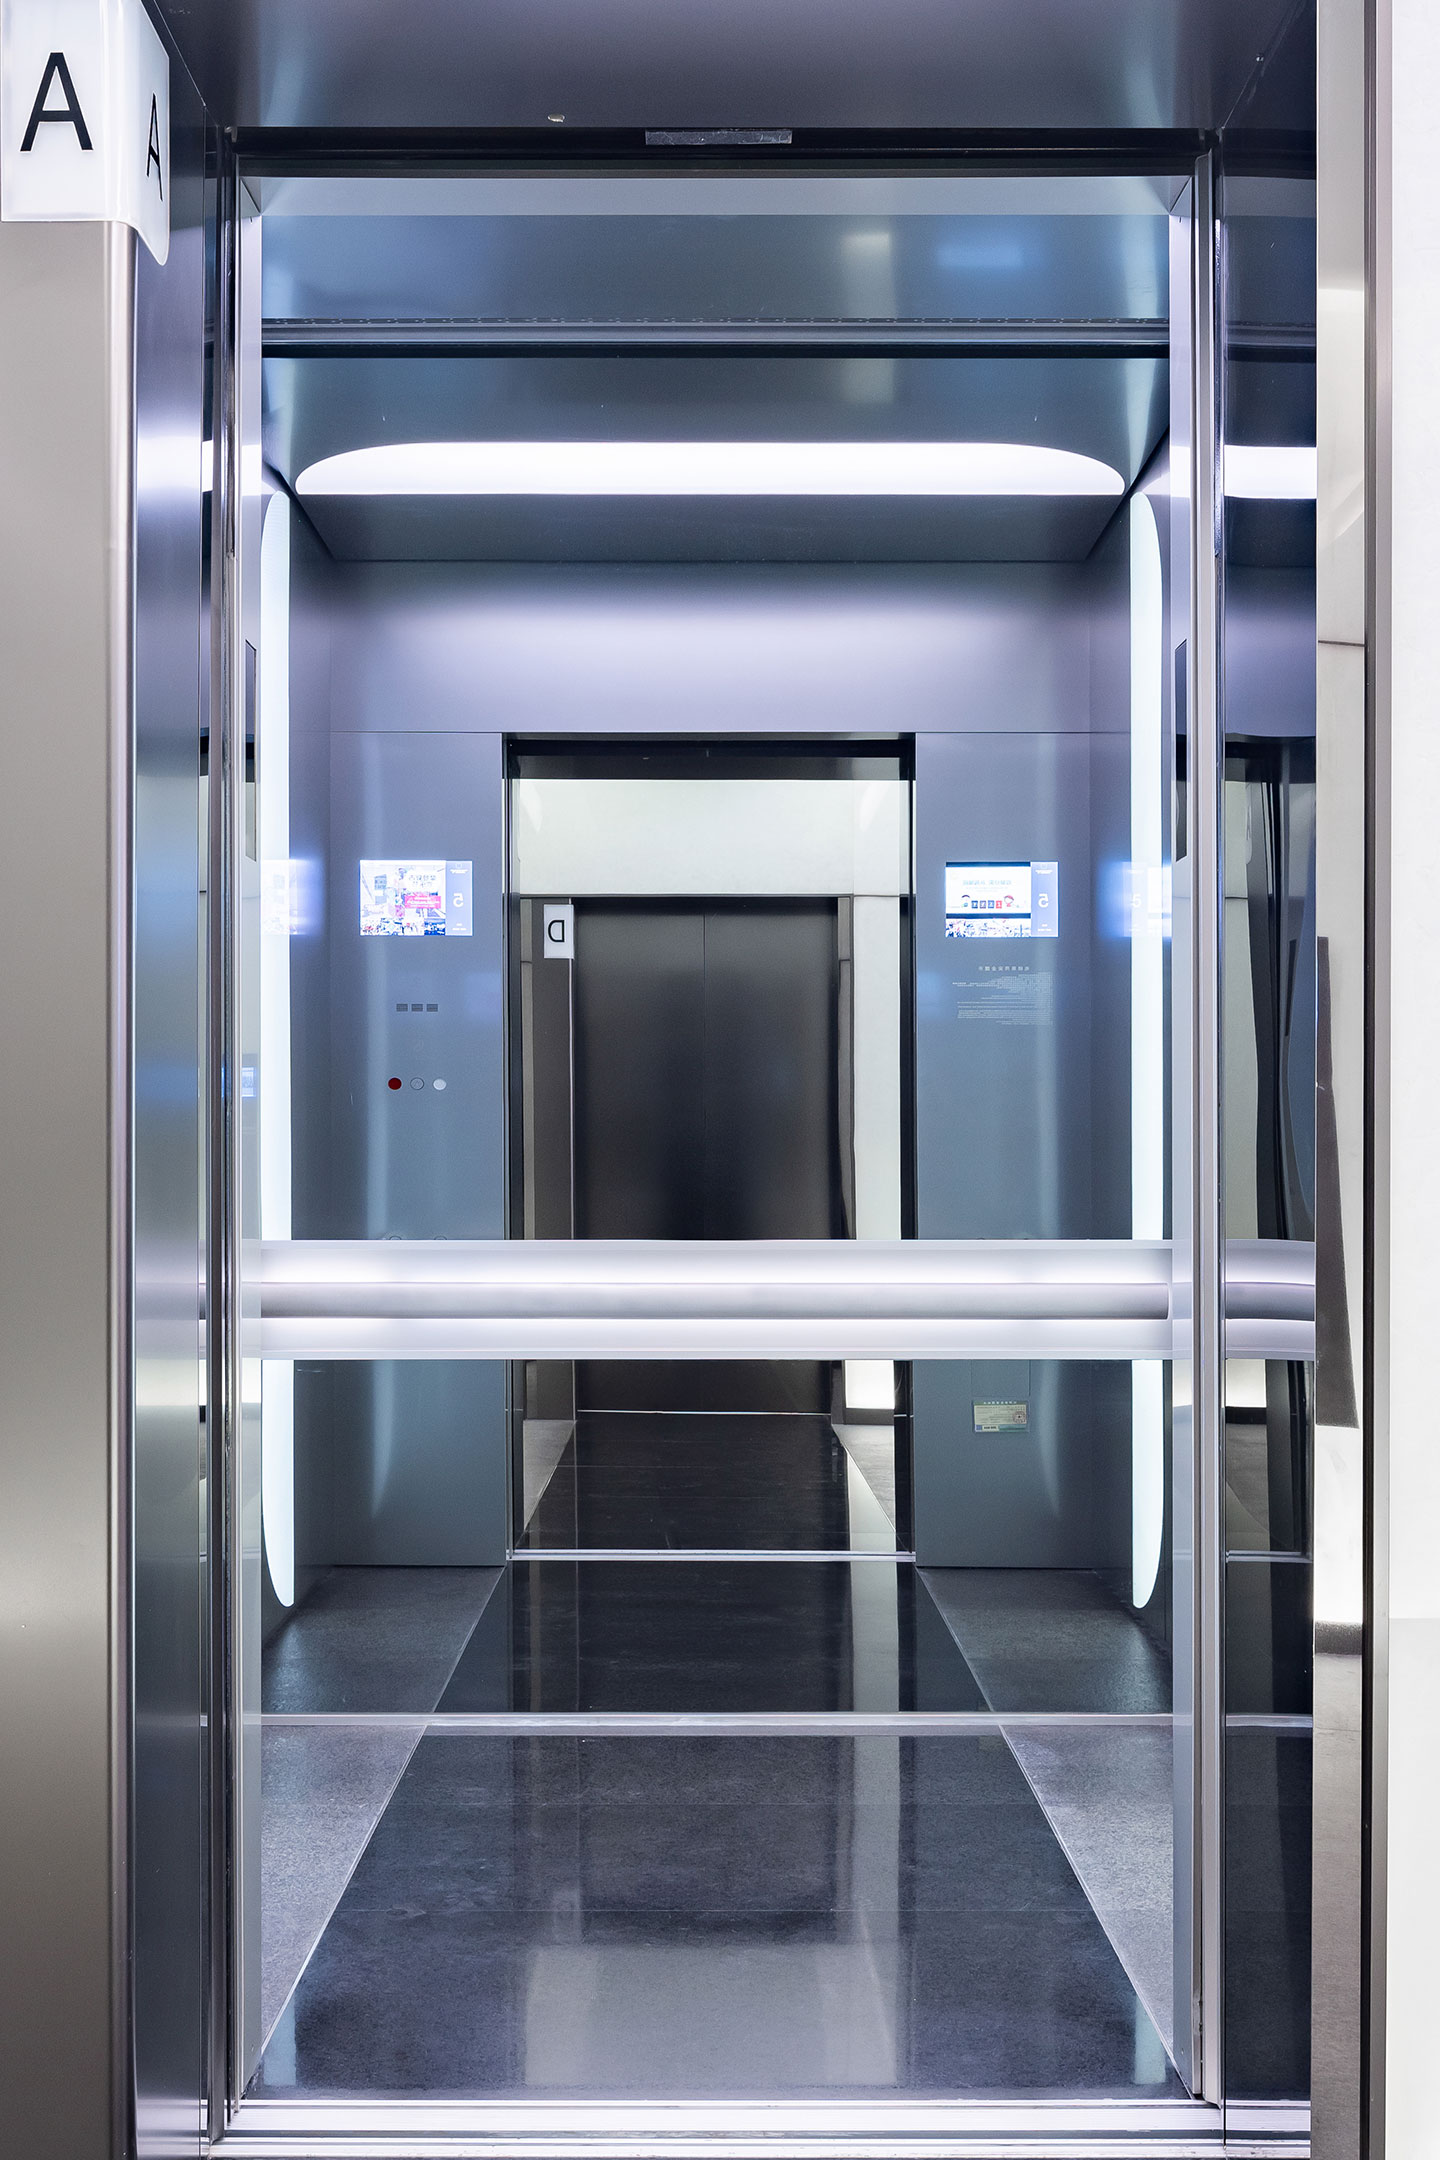 Cane Rebellion Korea Schindler 7000 High Performance Elevator for High-Rise Buildings